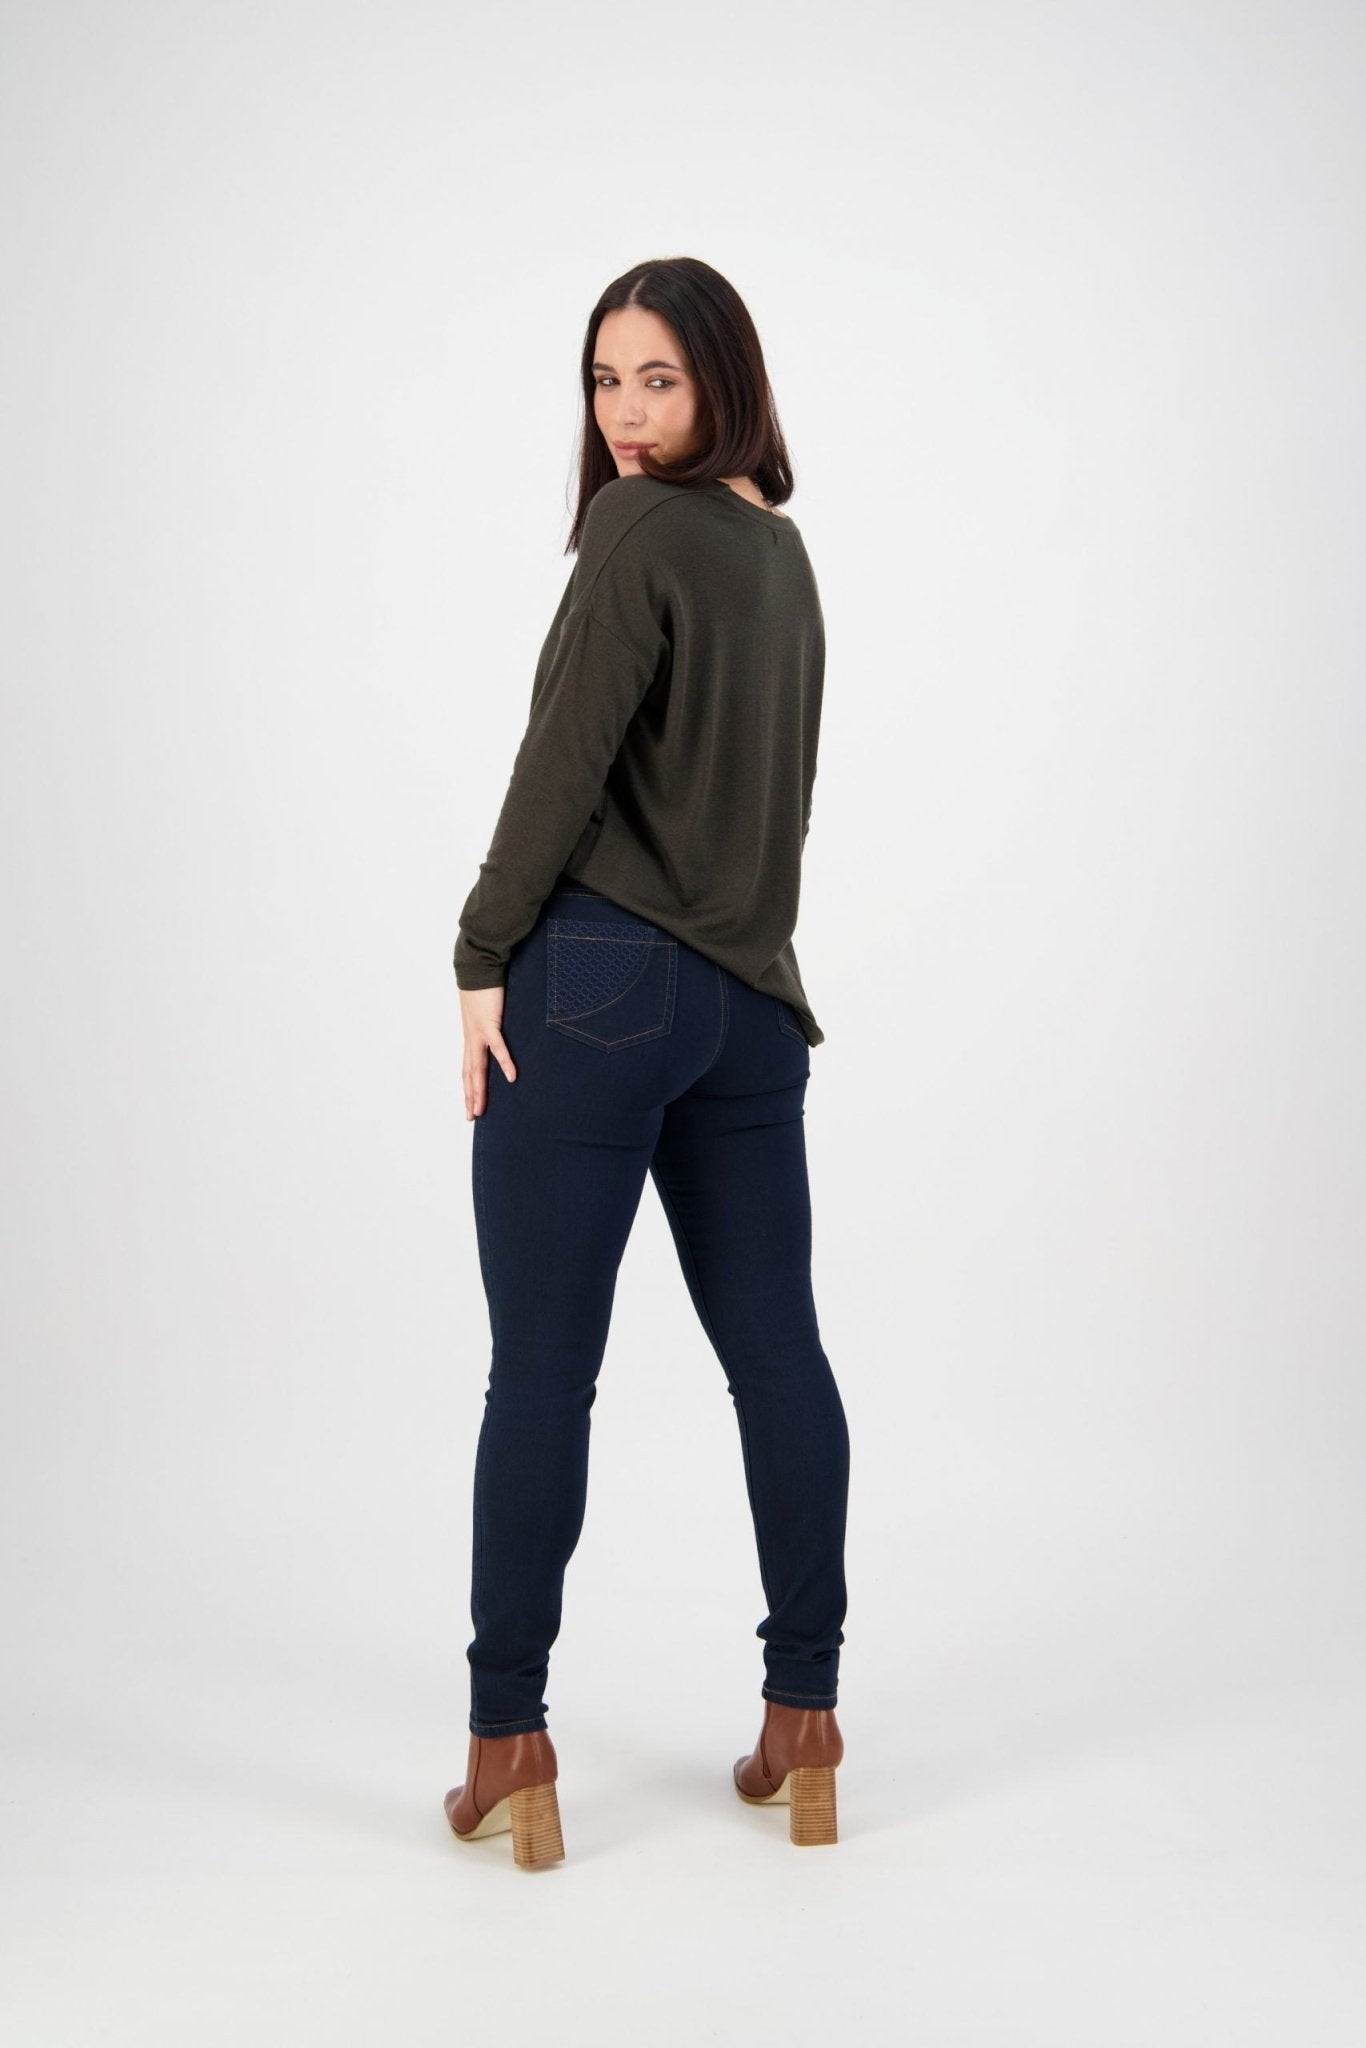 Shop Skinny Leg Full Length Jean in Indigo - Vassalli